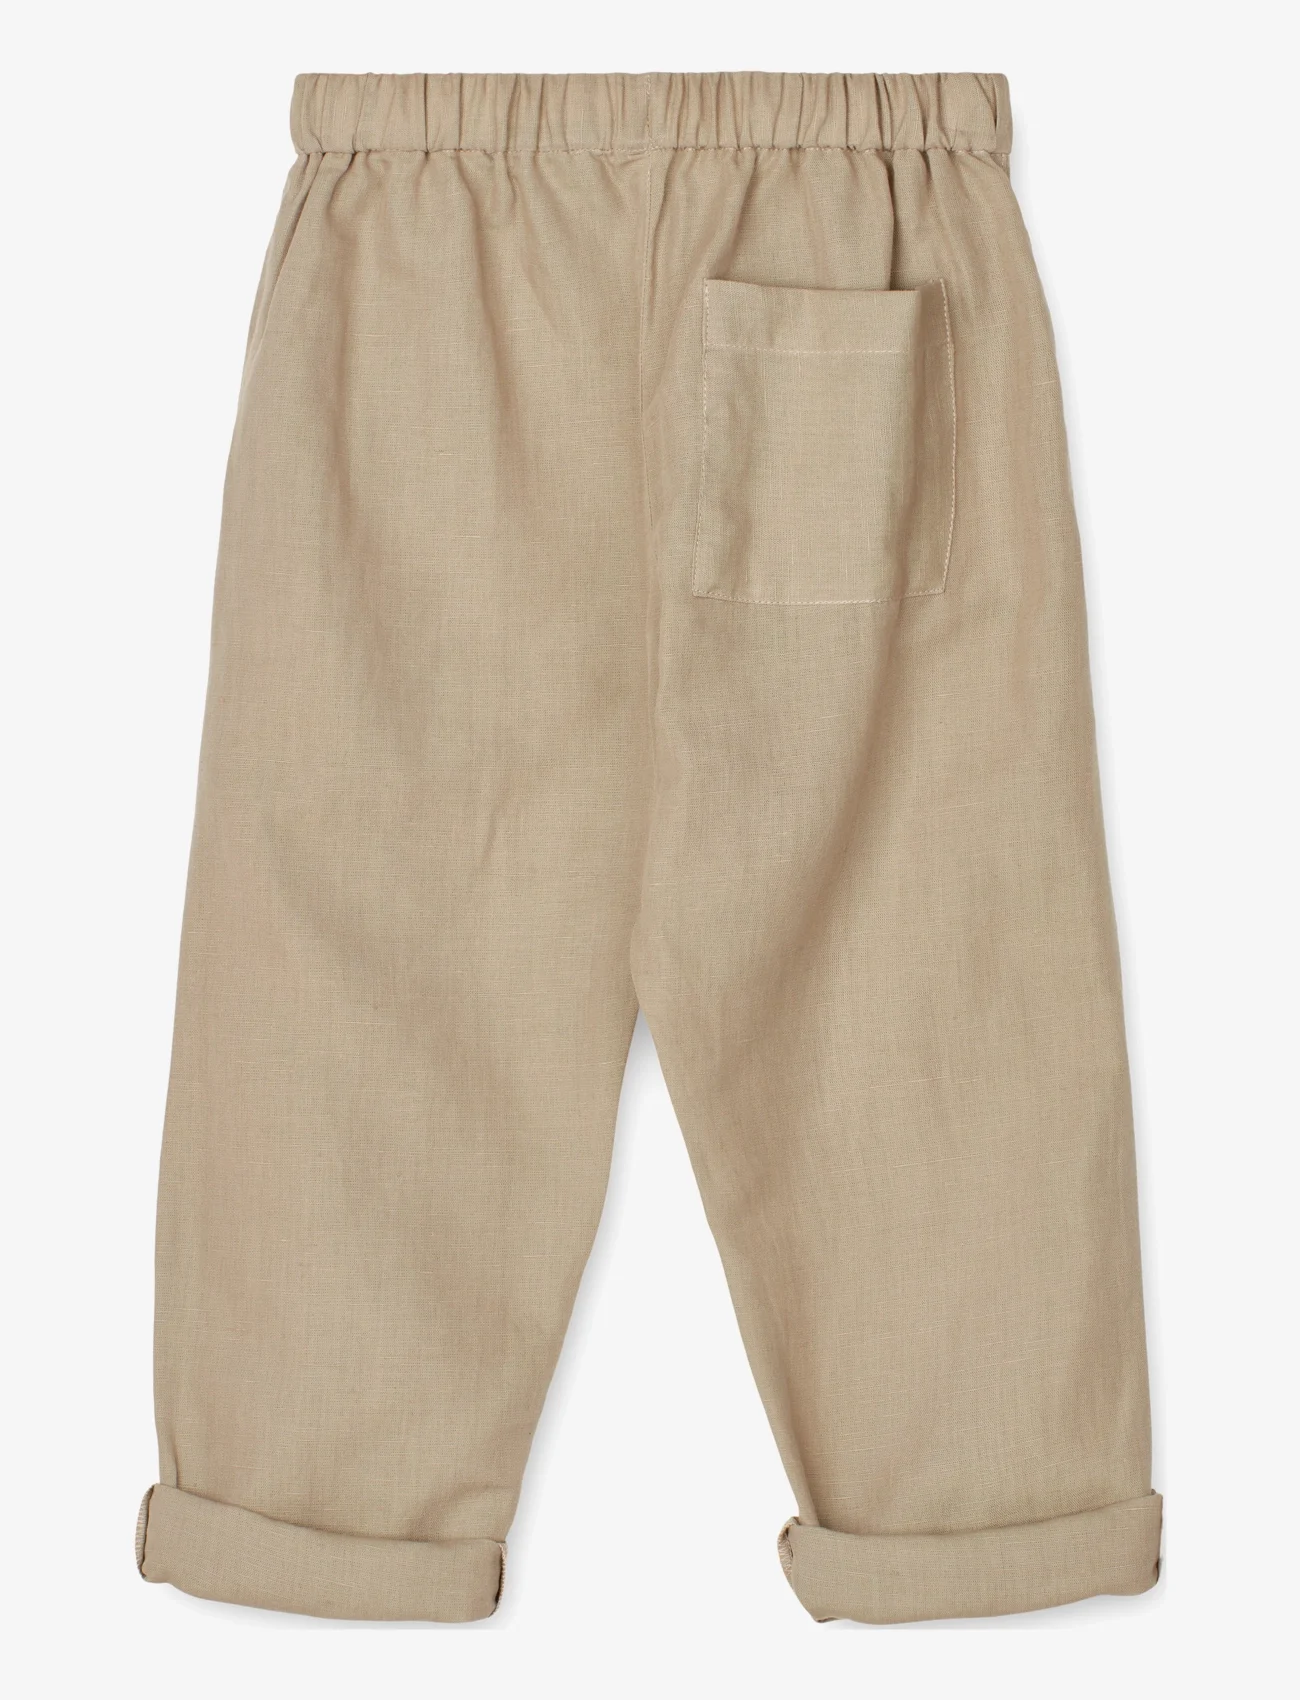 Liewood - Orlando Linen Pants - kelnės - mist - 1